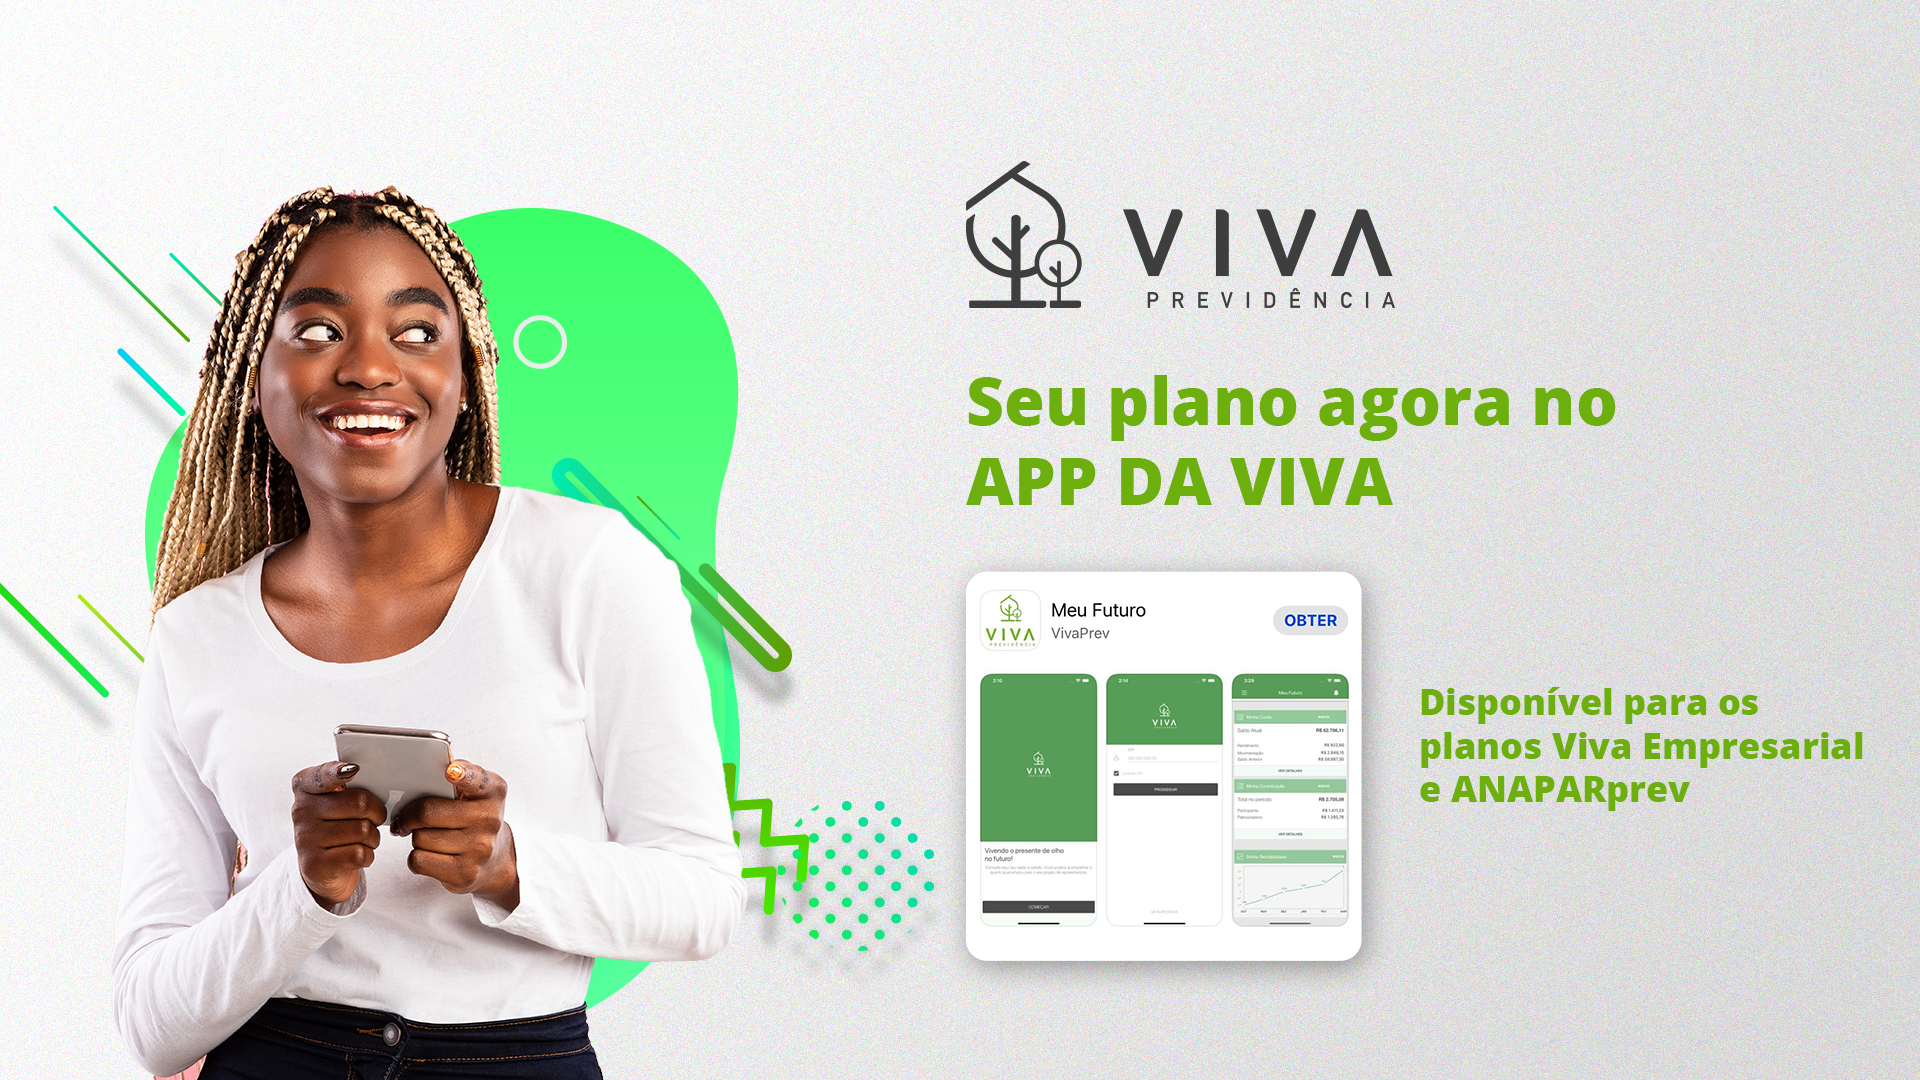 Viva lança aplicativo para planos ANAPARprev e Viva Empresarial